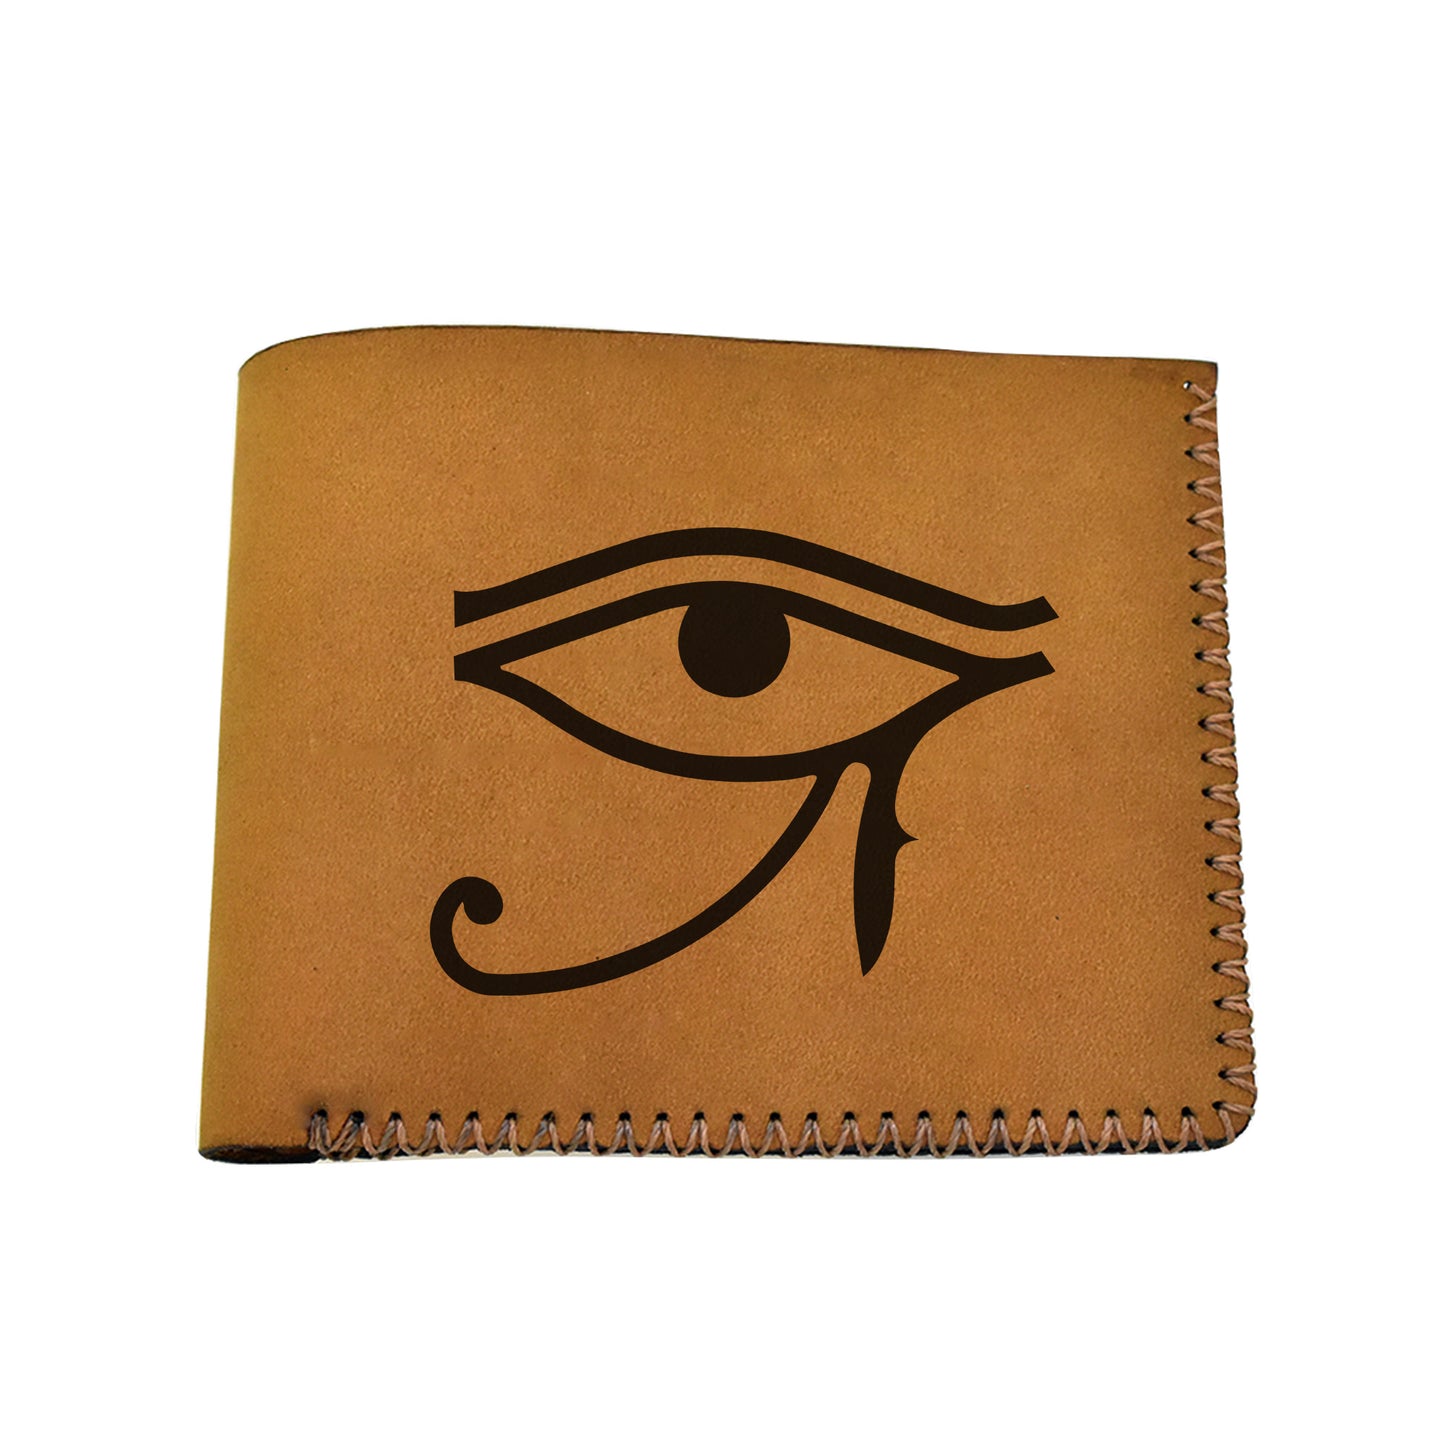 Men's The Eye Of Ra & Horus Genuine Leather Blocking Bifold Wallet MHLT_02_BRN